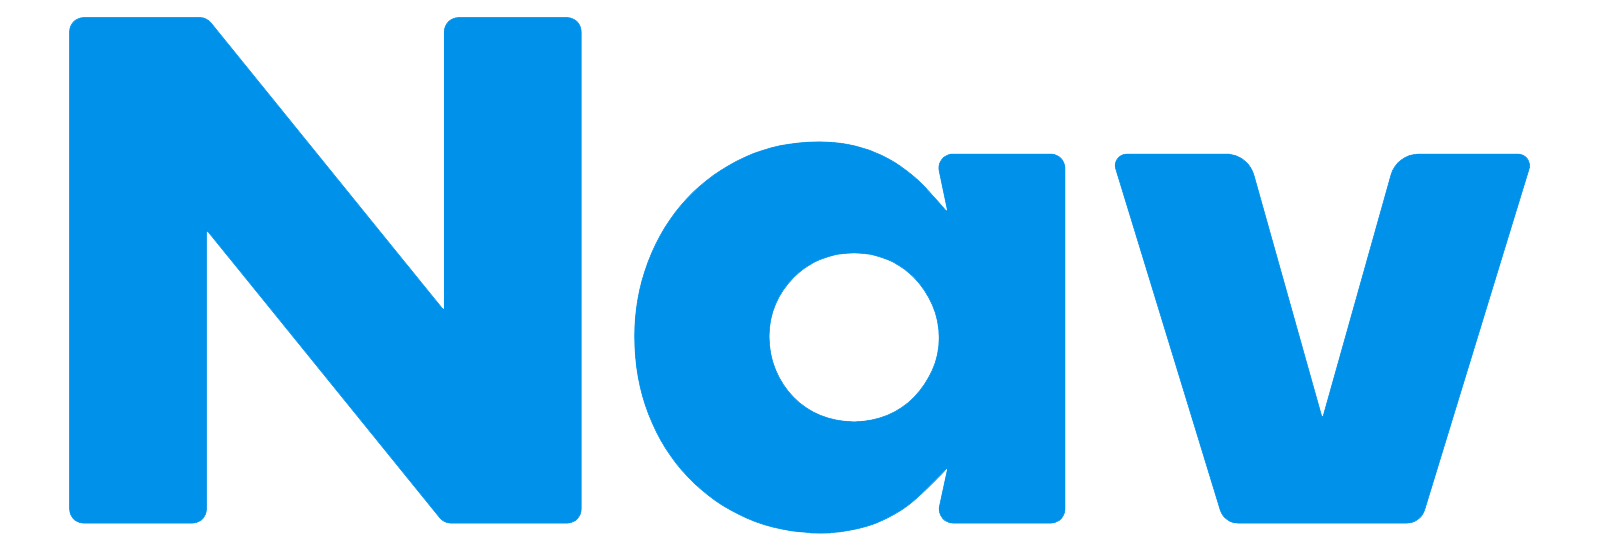 nav-logo-2018.png